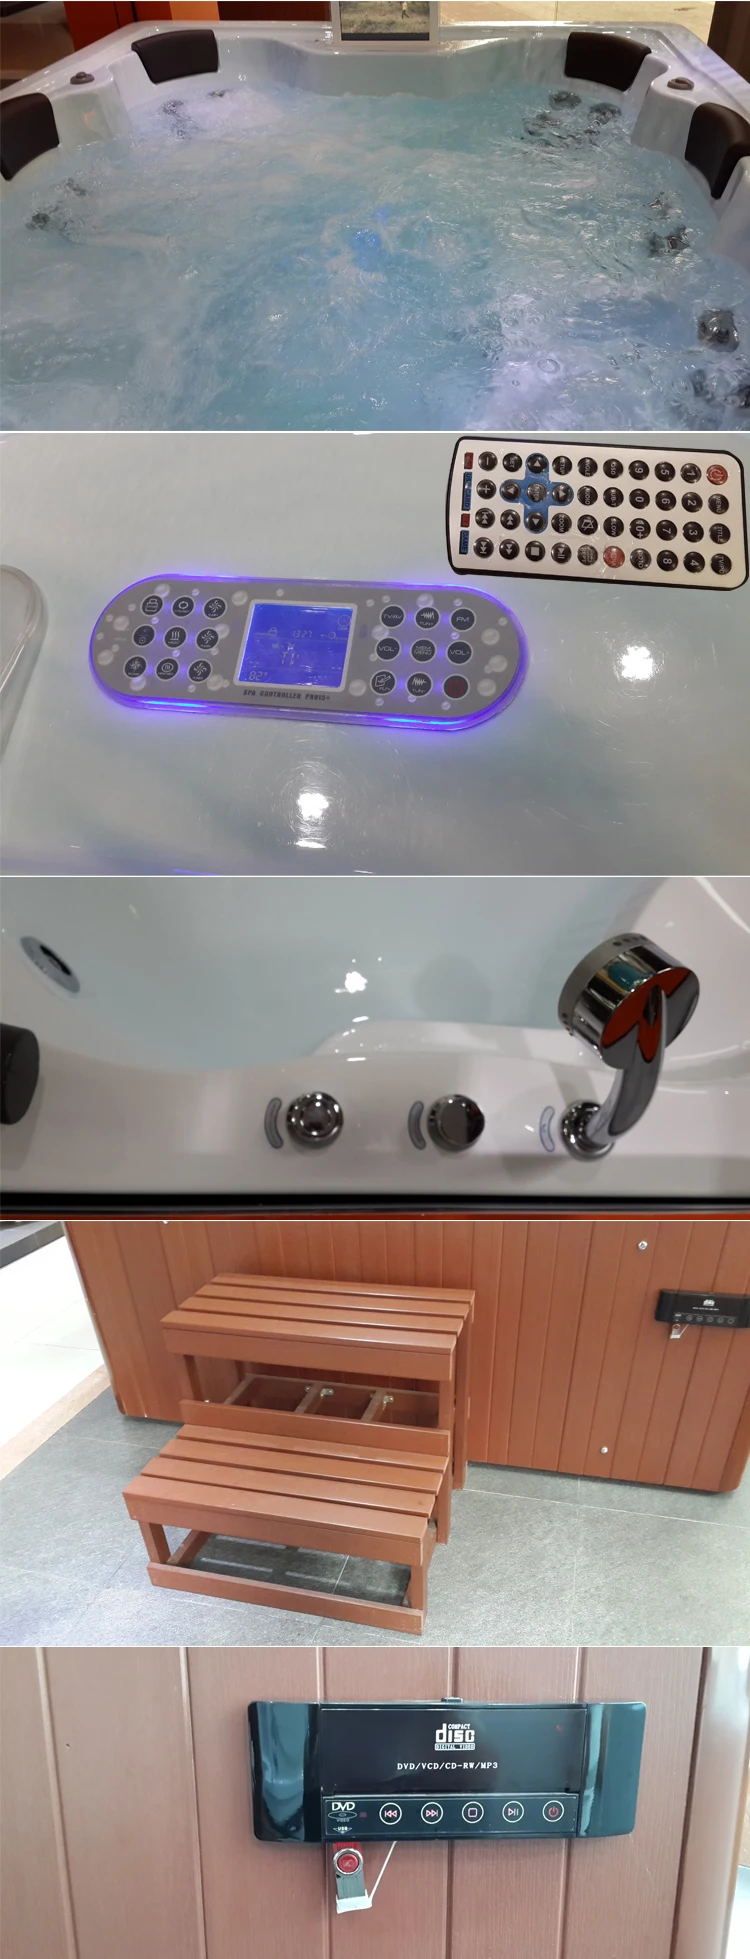 Sex Japan Massage Tv Hot Tub With Balboa Control System Buy Hot Tub